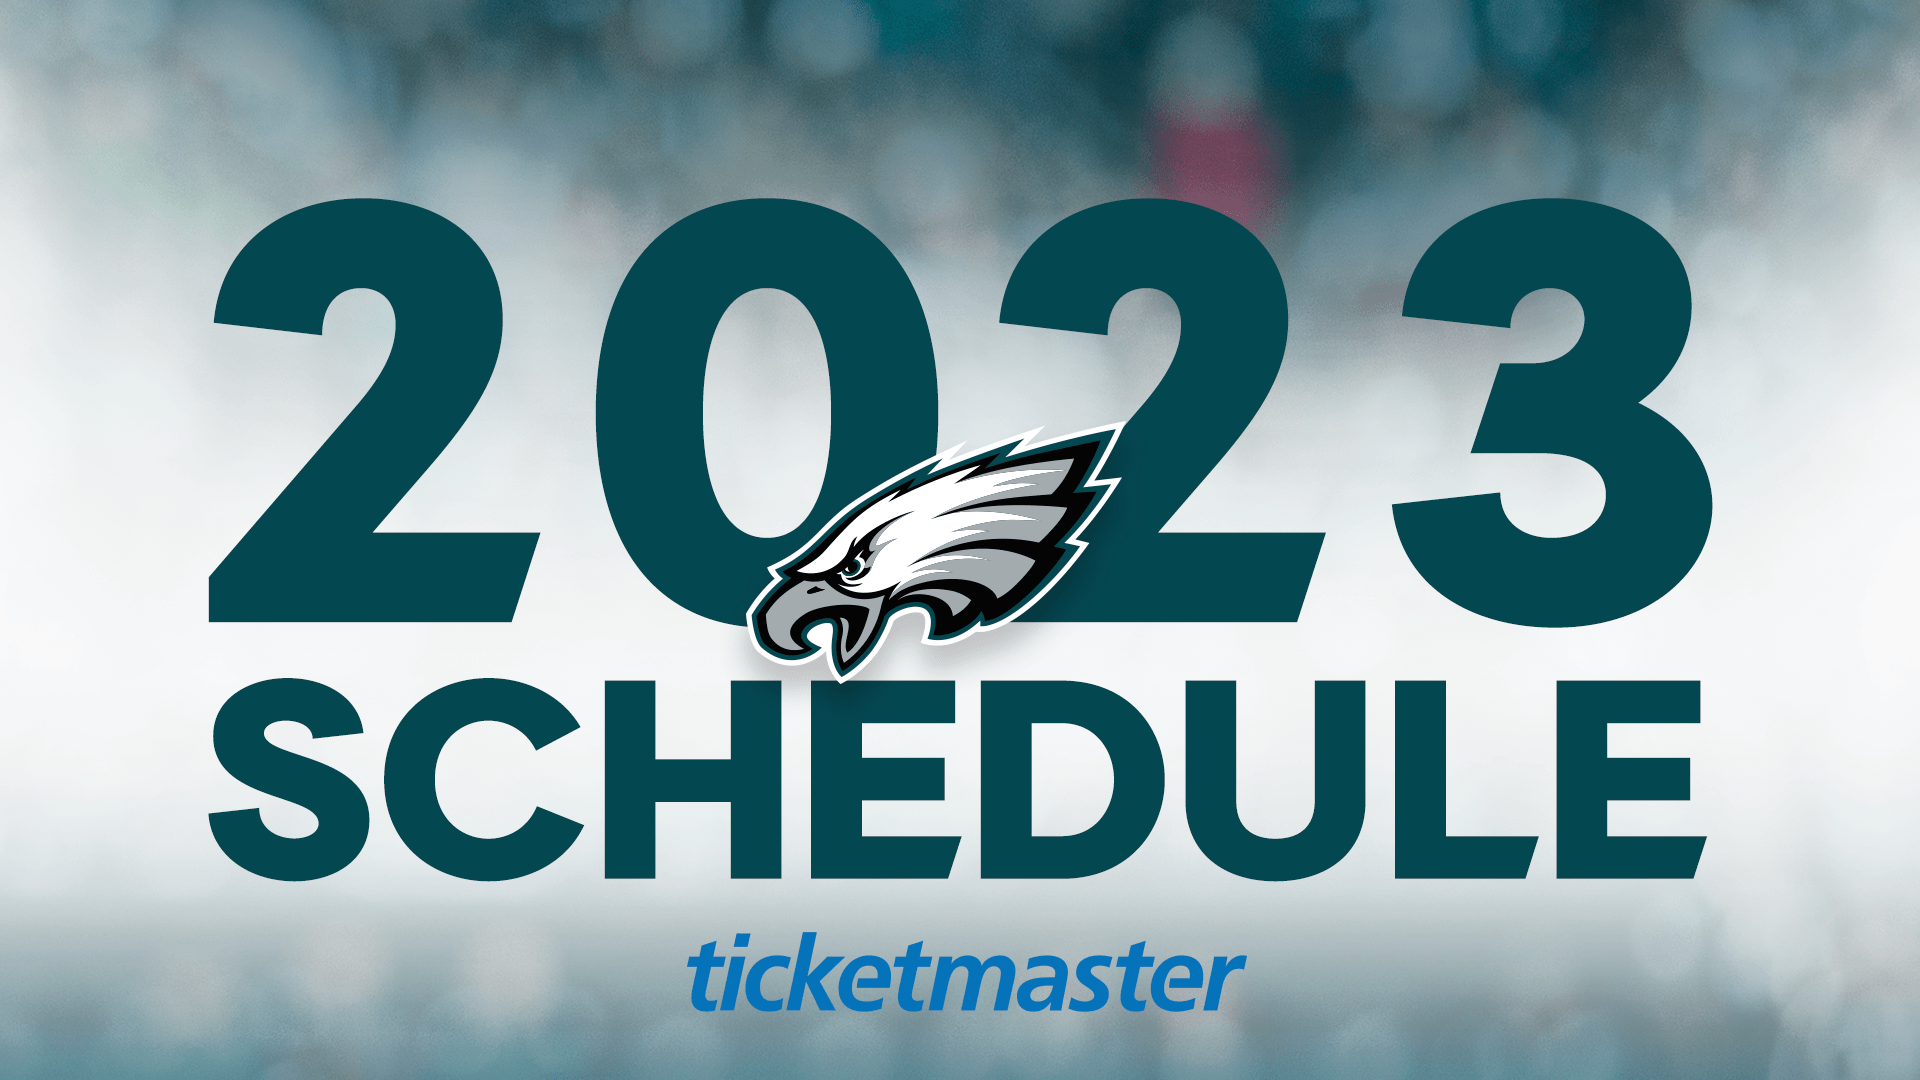 Printable 2021-2022 Philadelphia Eagles Schedule